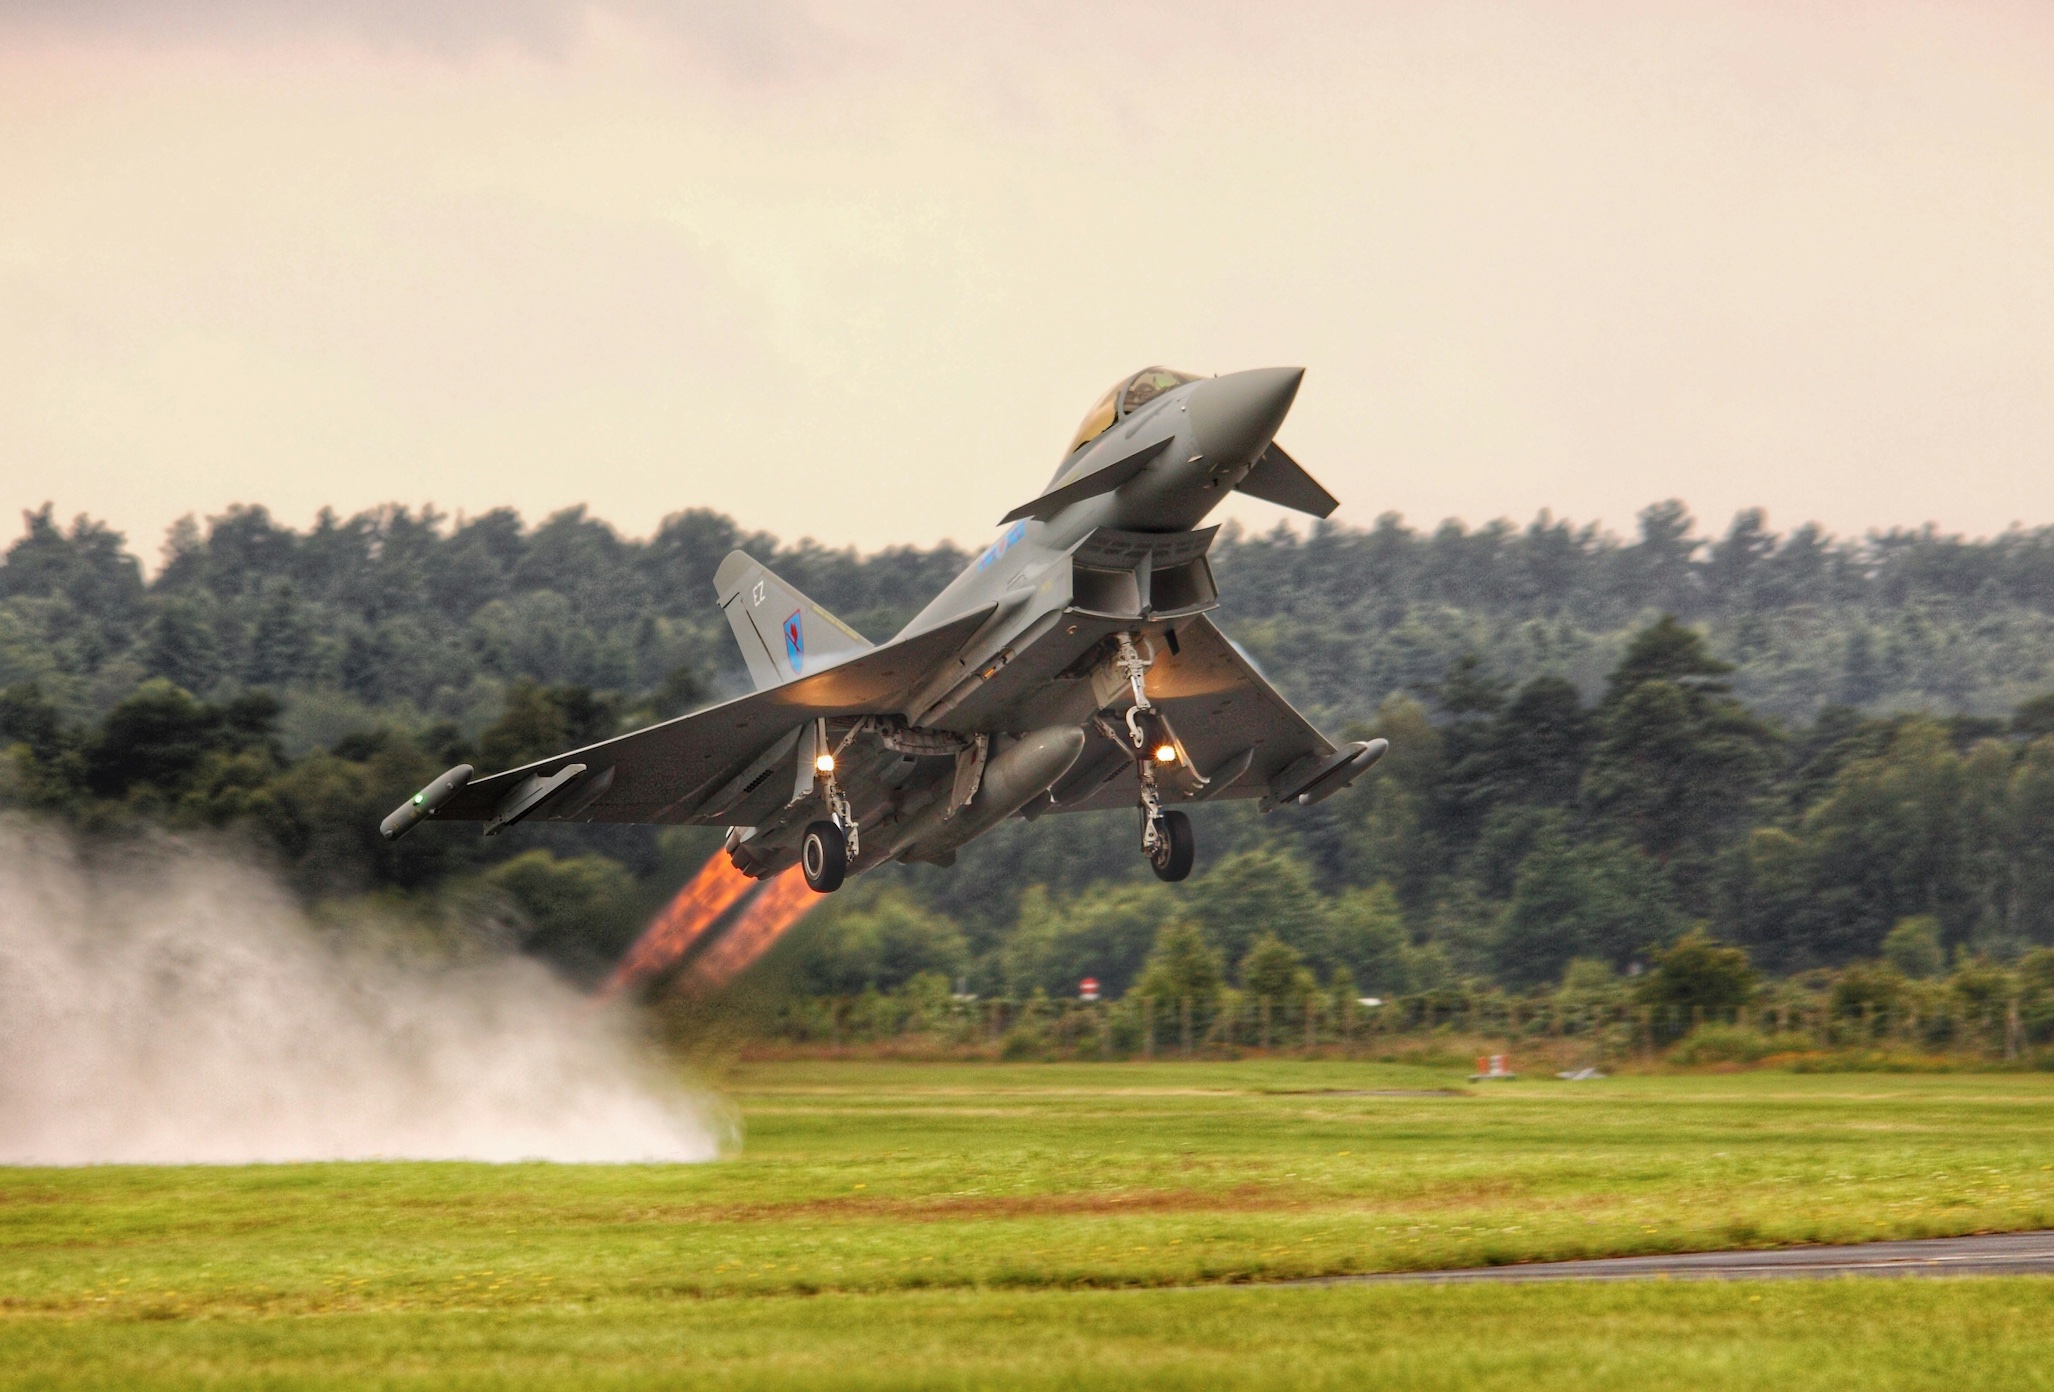 FIghter jet; image by Jonathan Ridley, via Unsplash.com.